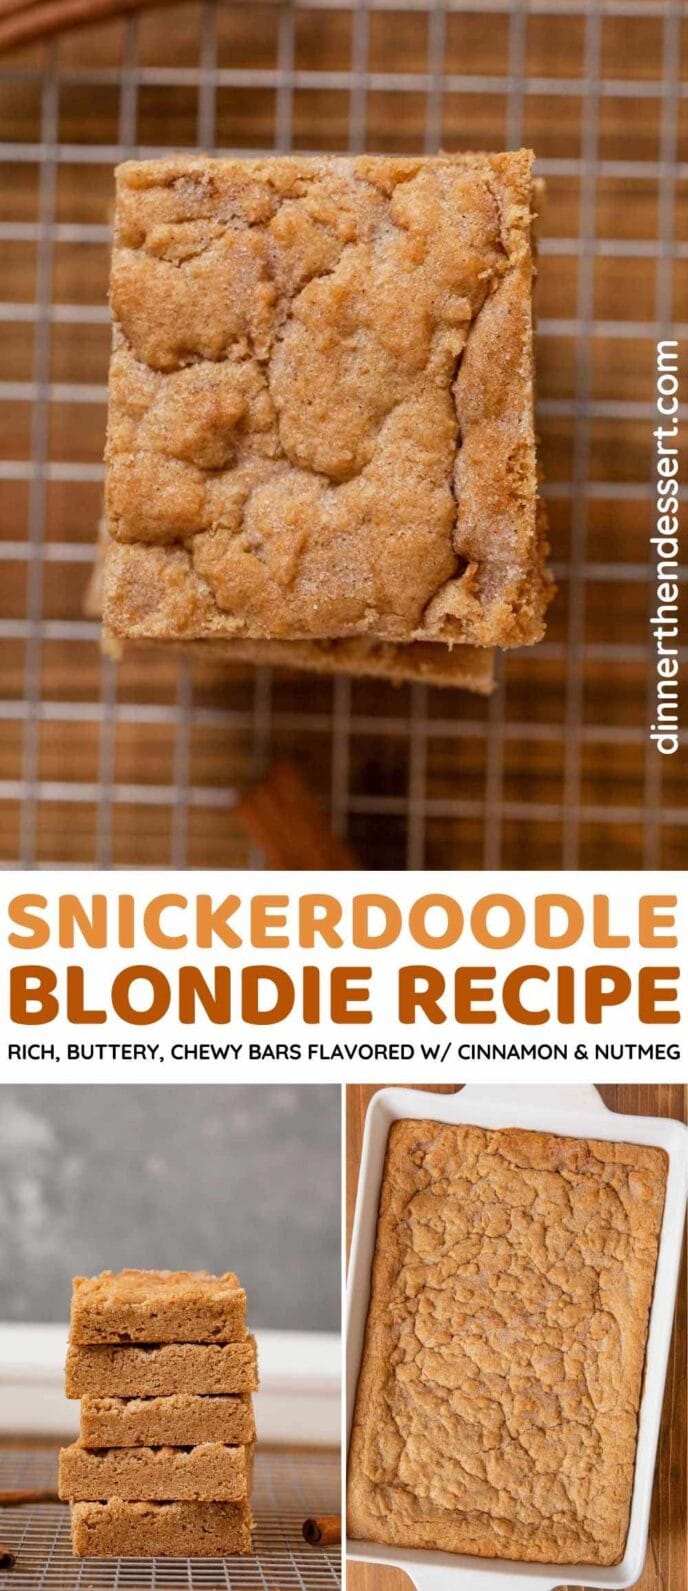 Snickerdoodle Blondies collage